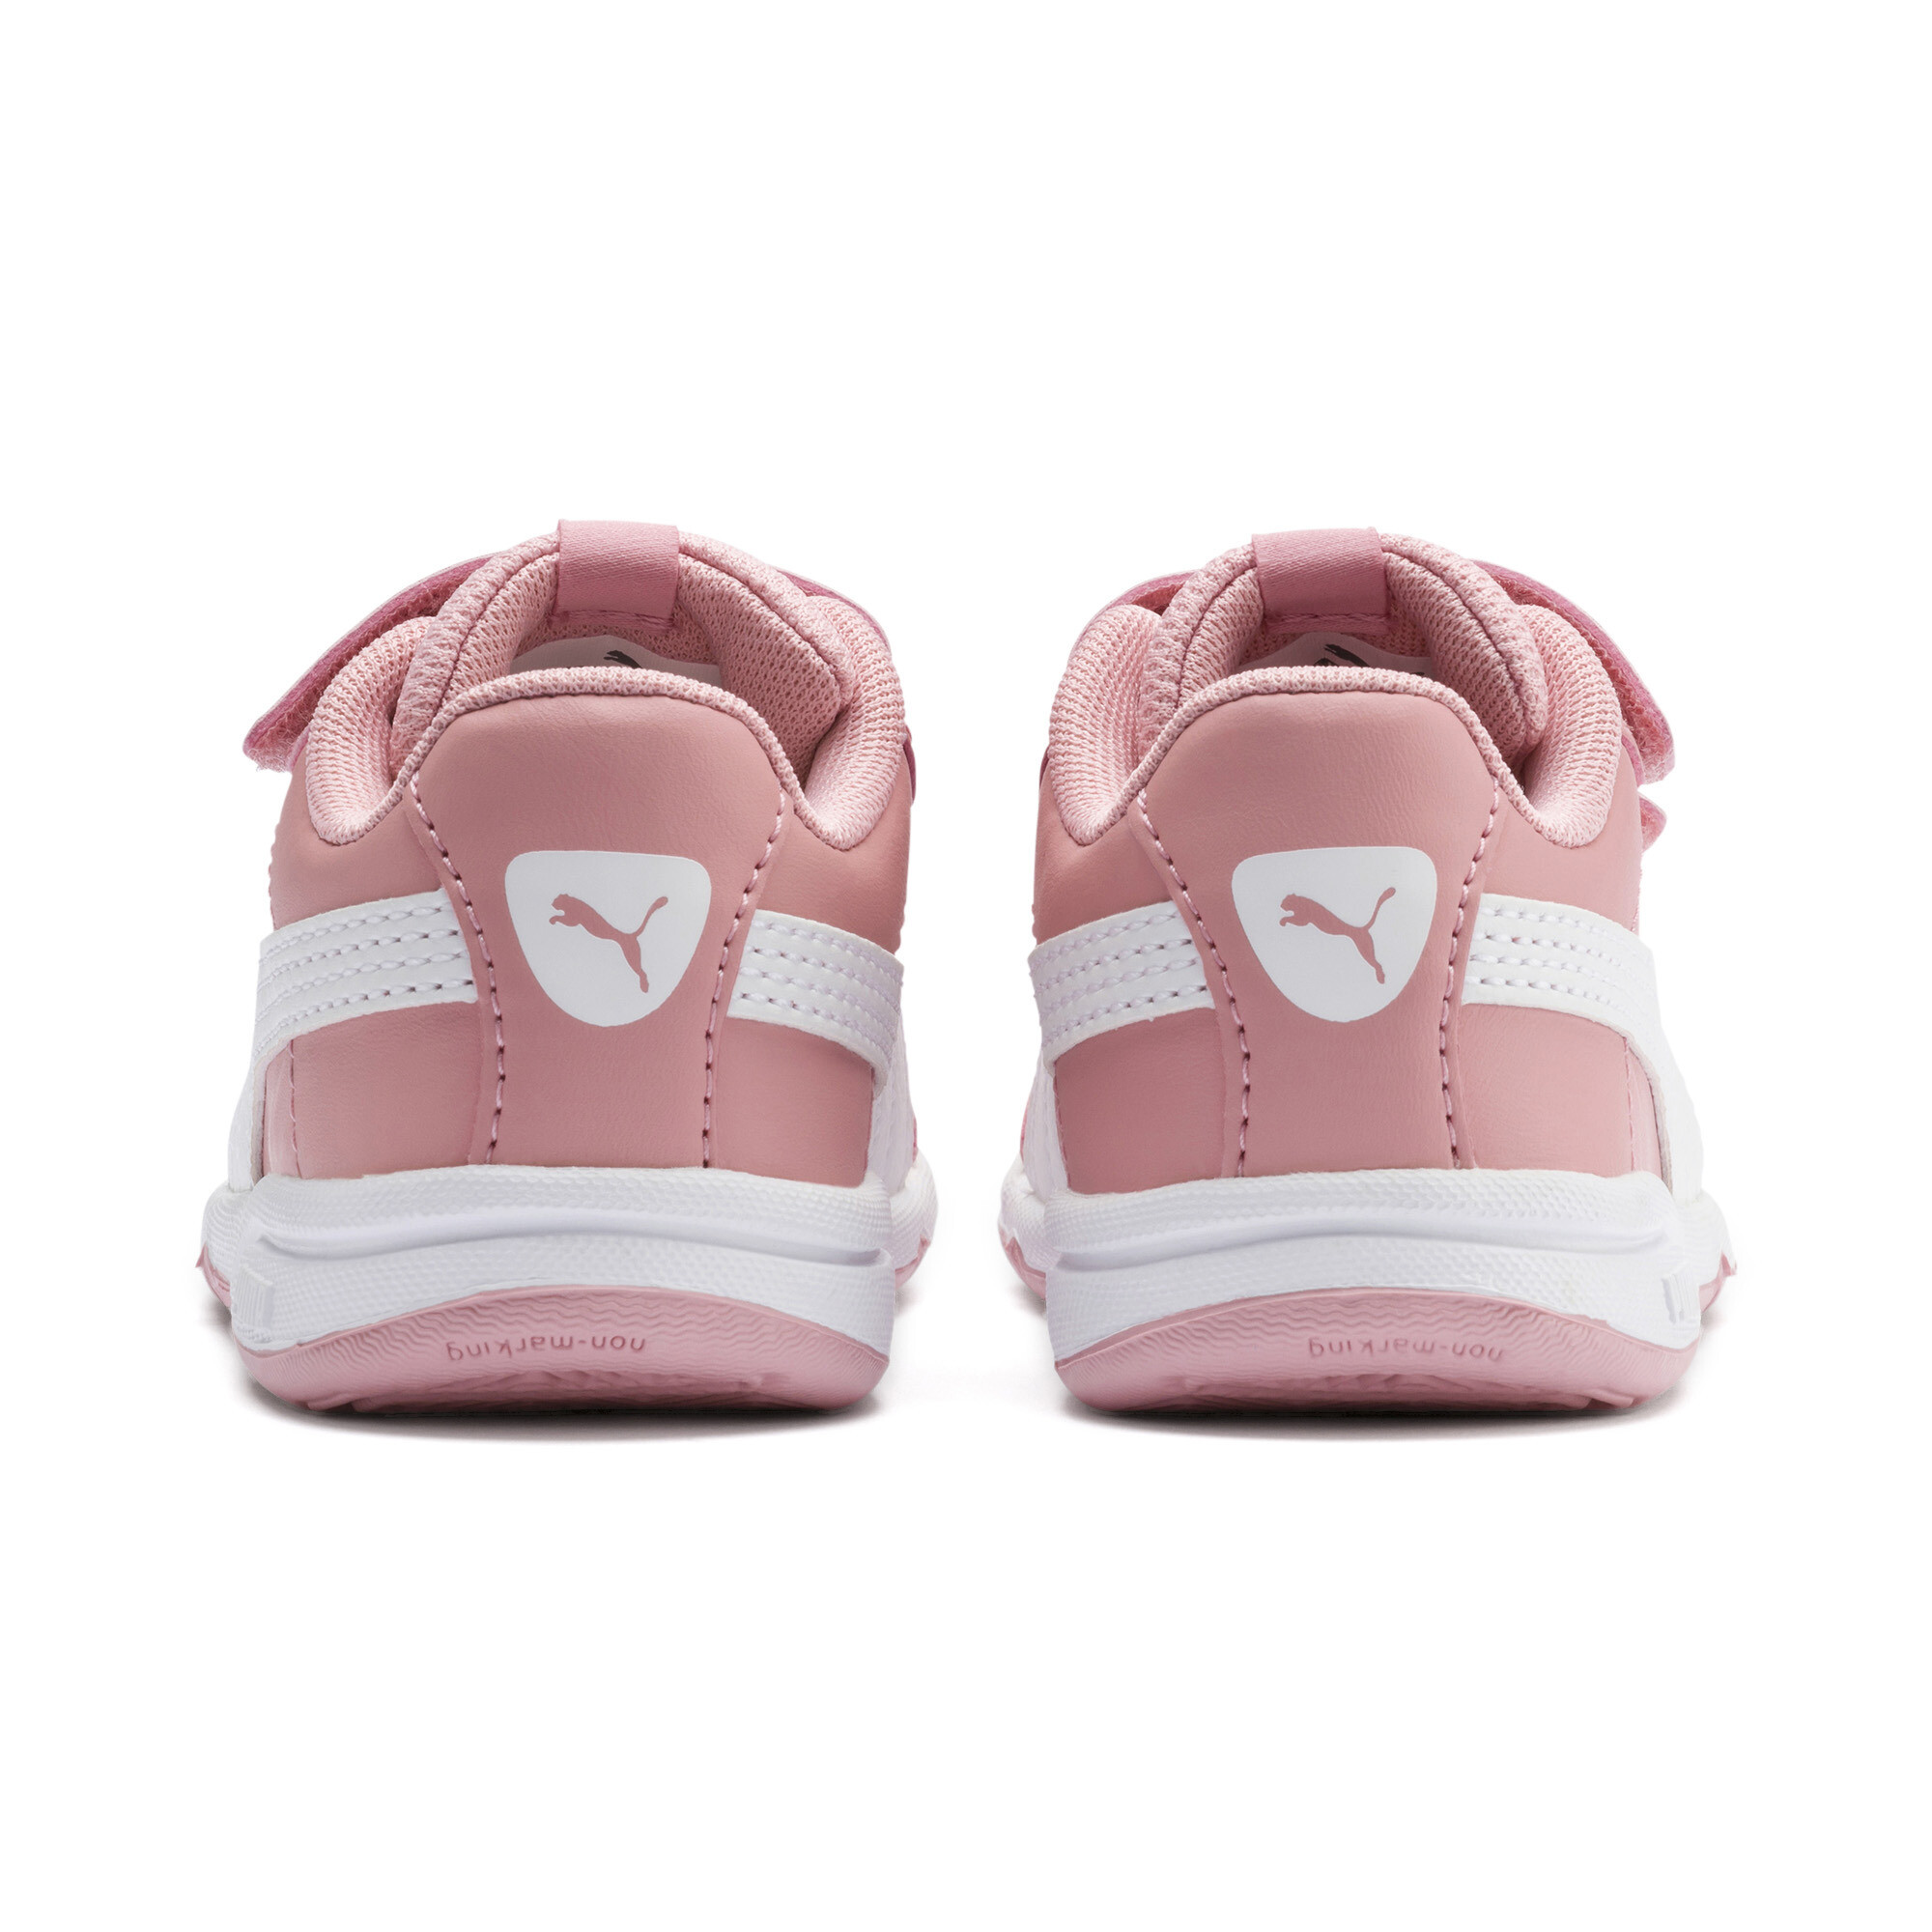 Puma Stepfleex 2 SL VE V Babies' Trainers, Pink, Size 20, Shoes